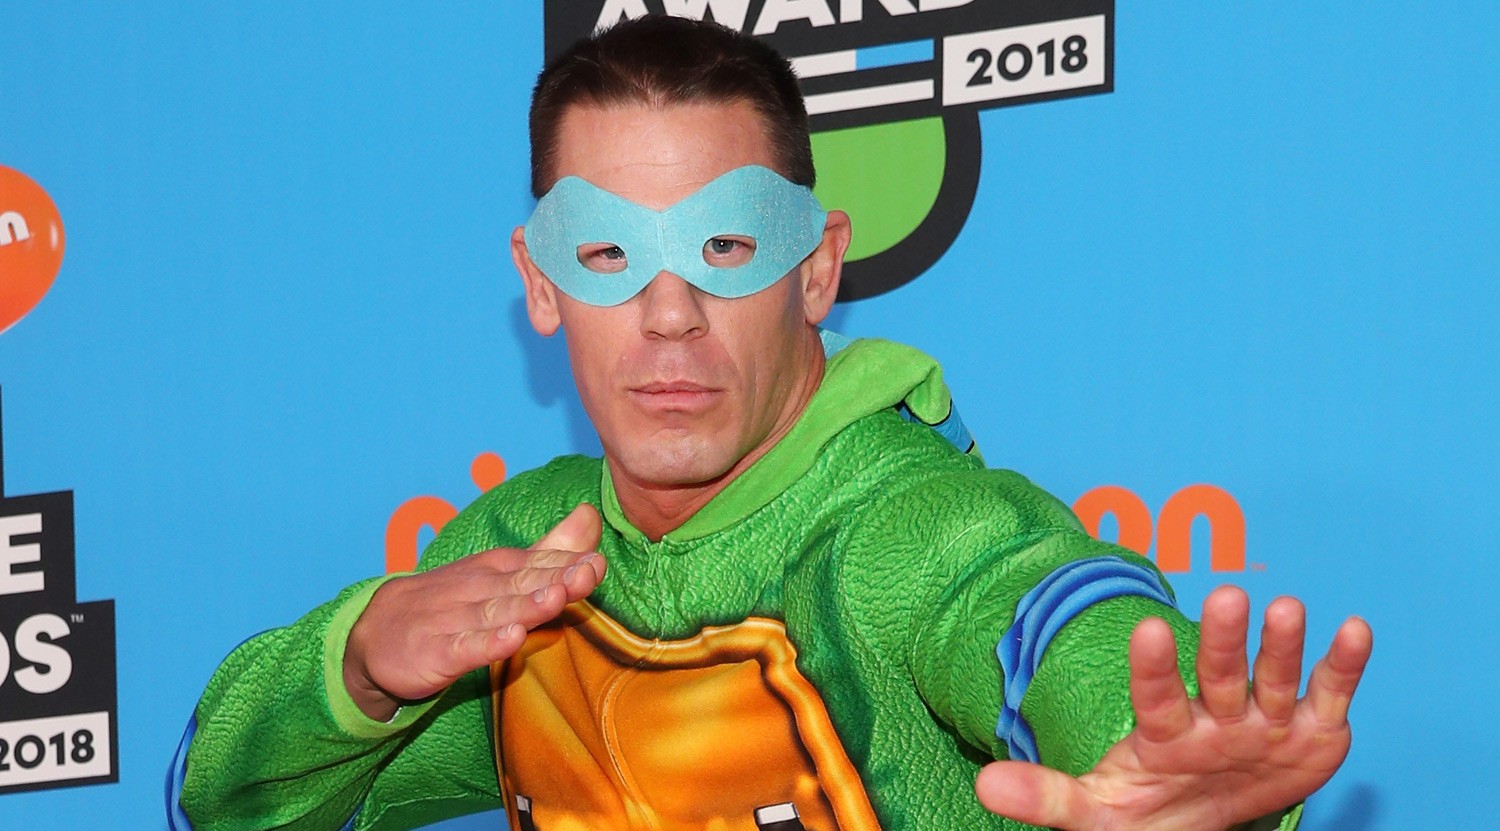 John Cena in Ninja Turtles attire 